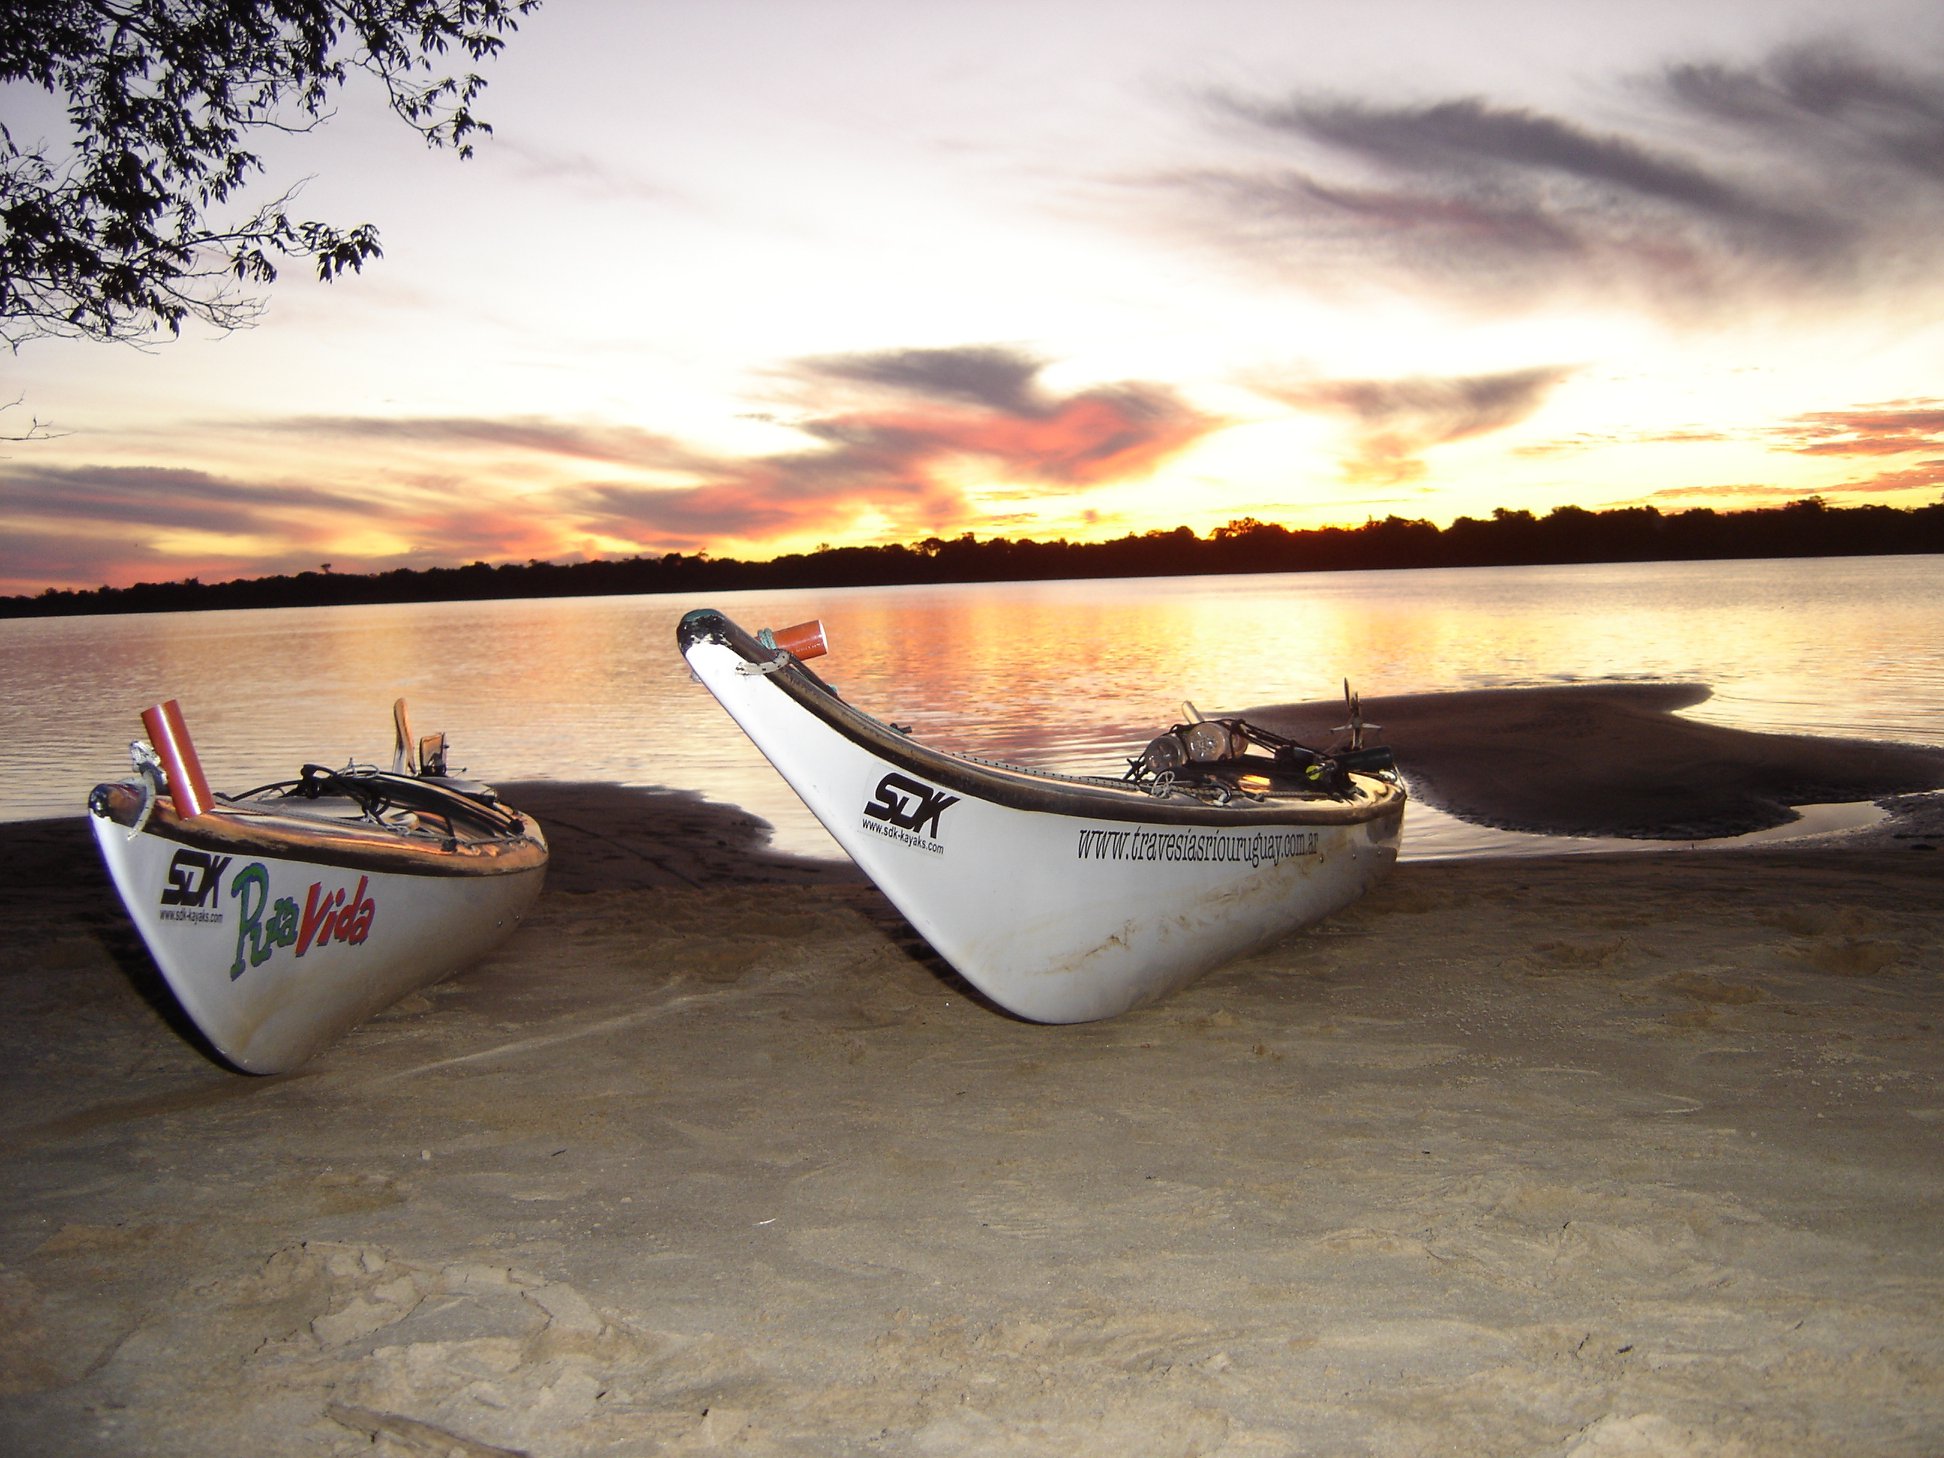 Kayak Travesía Río Uruguay